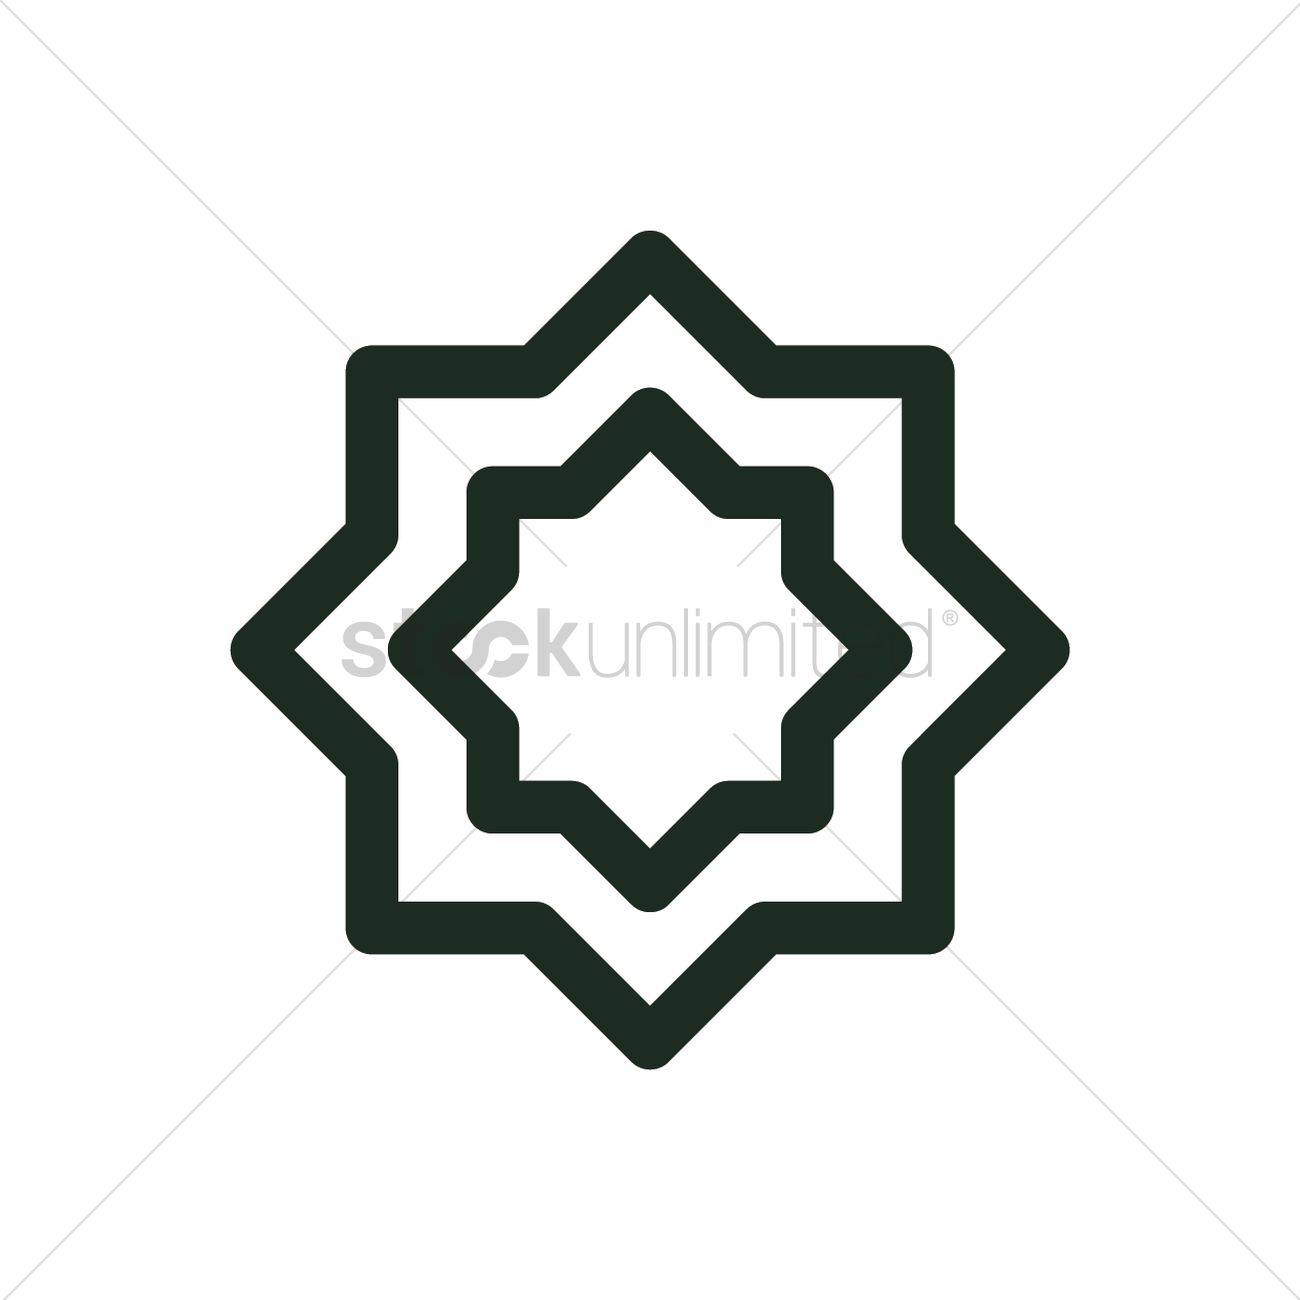 Islamic icons | Noun Project